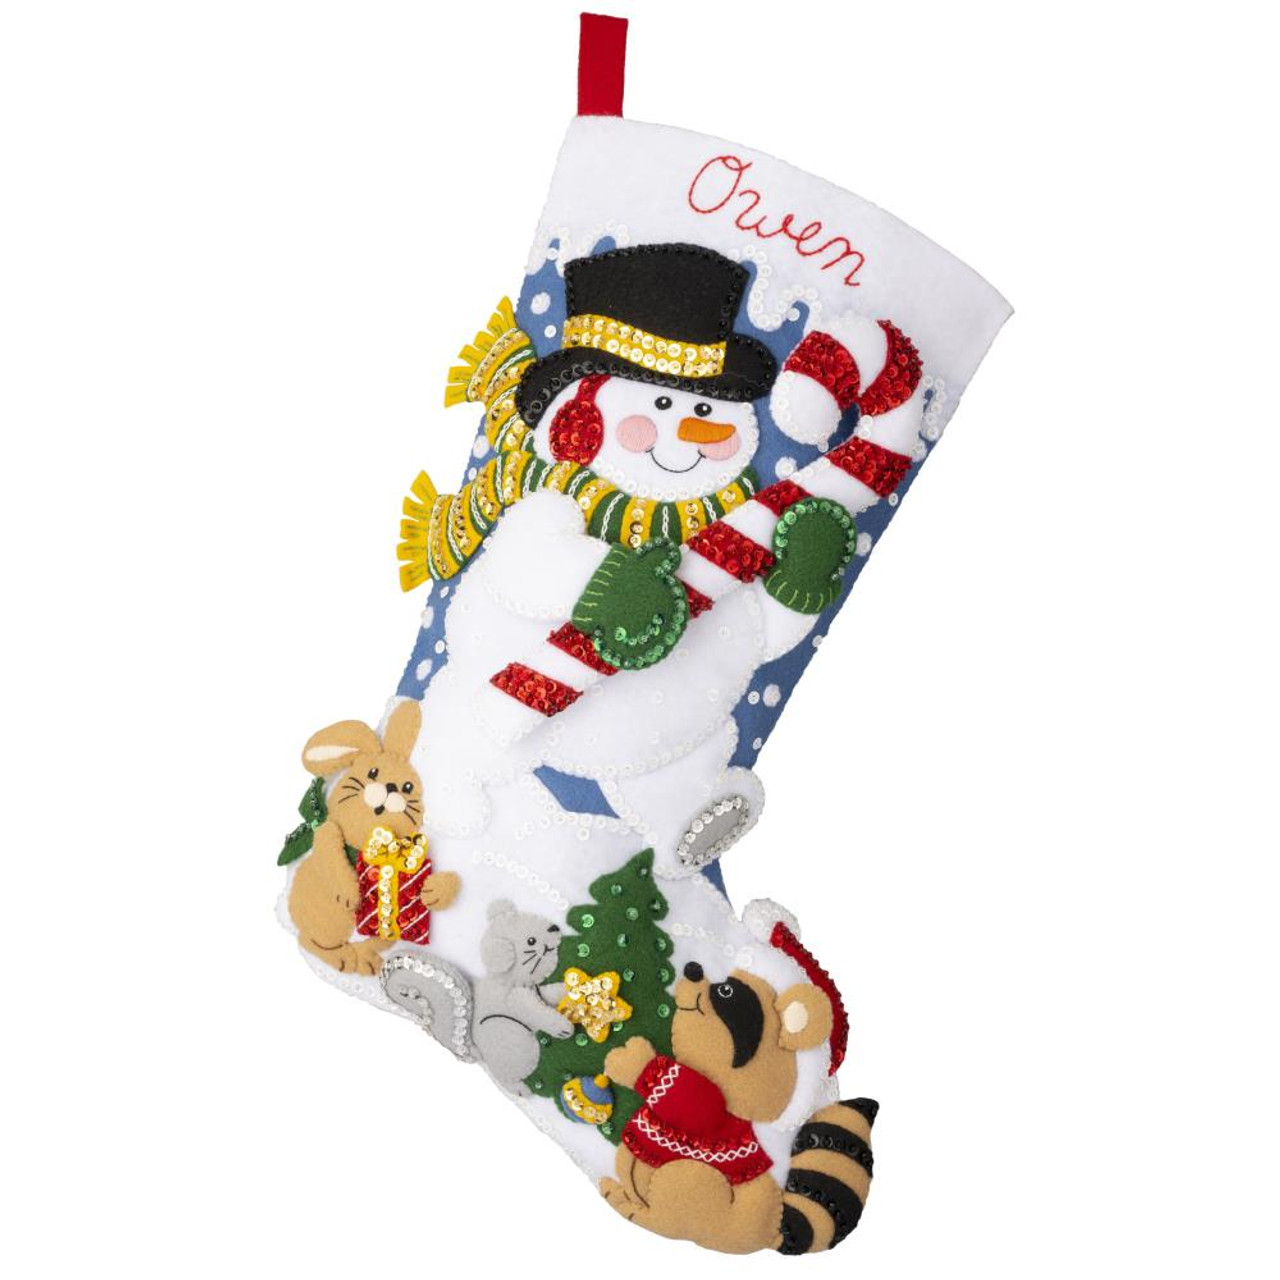 Bucilla Felt Stocking Applique Kit 18 Long-Candy Cane Snowman 89563E